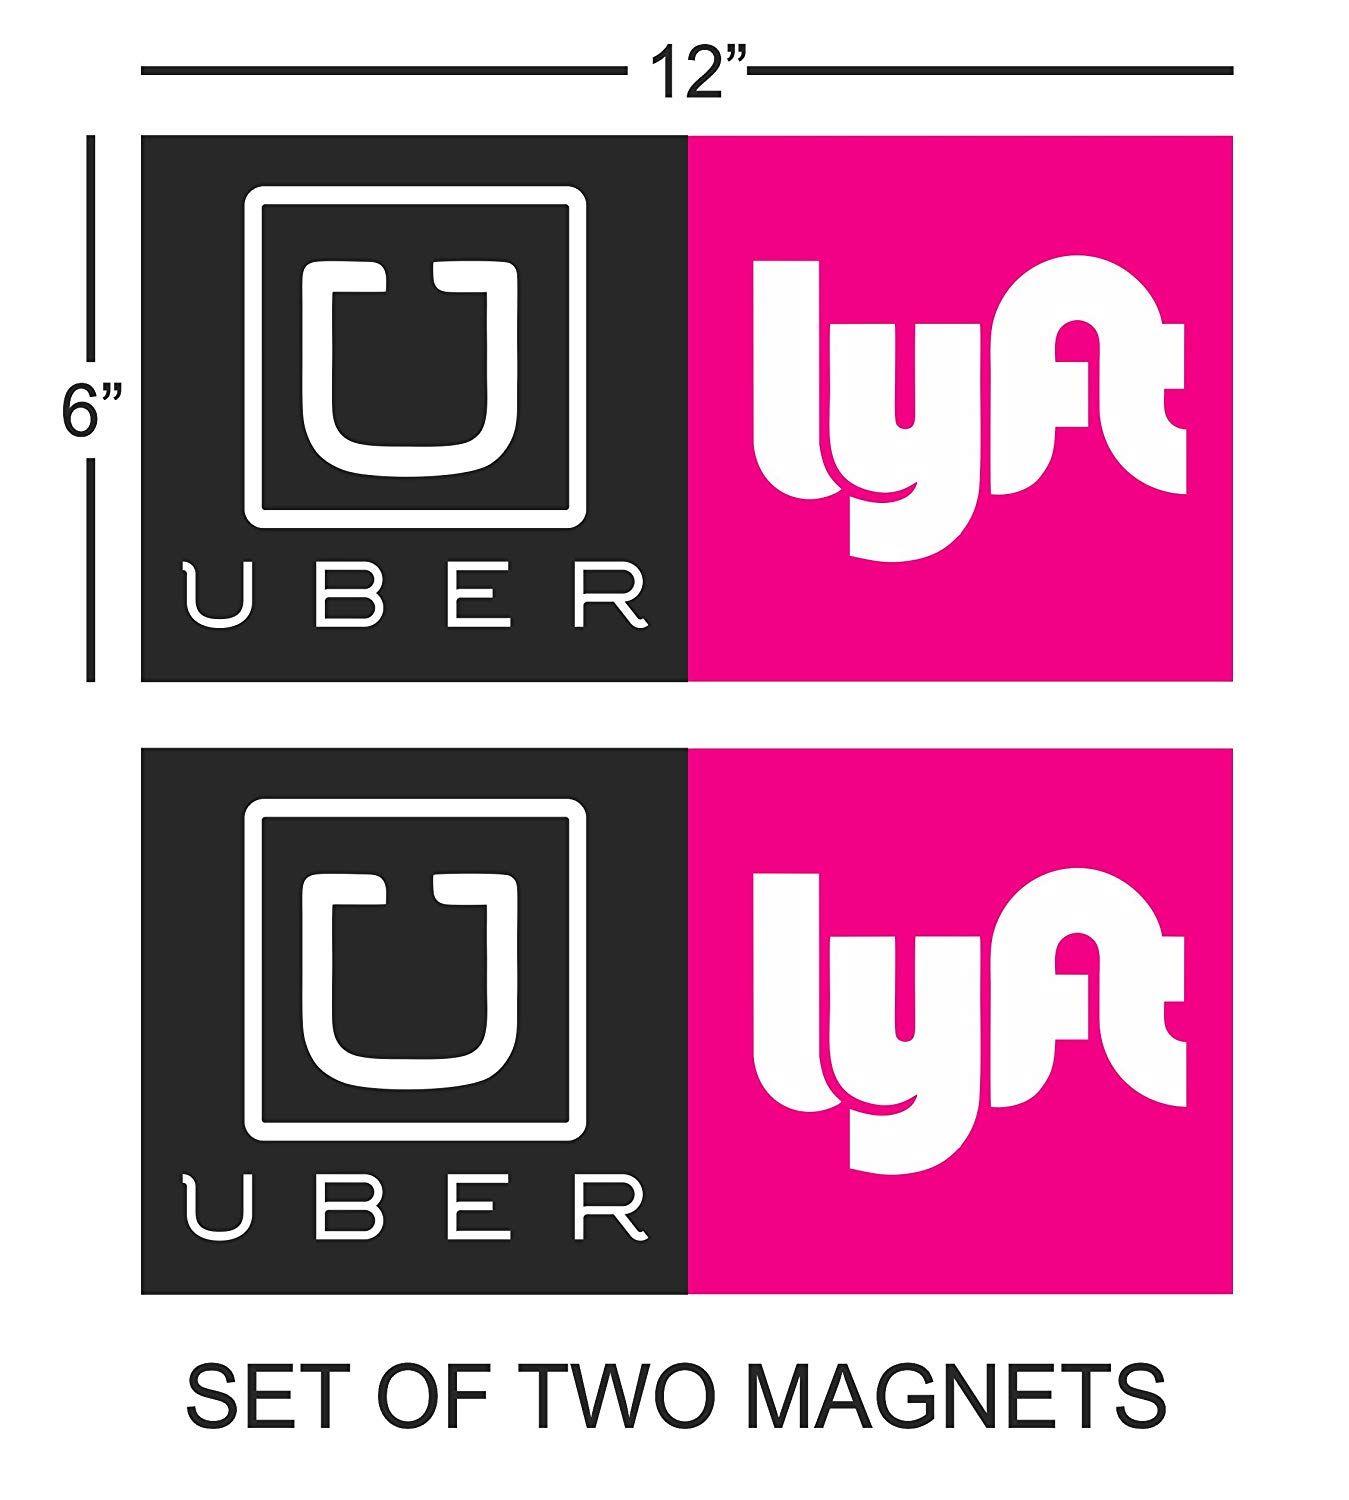 Uber Lyft Logo - Amazon.com: Uber, Lyft Car Magnets, Vehicle Removable Magnetic Signs ...